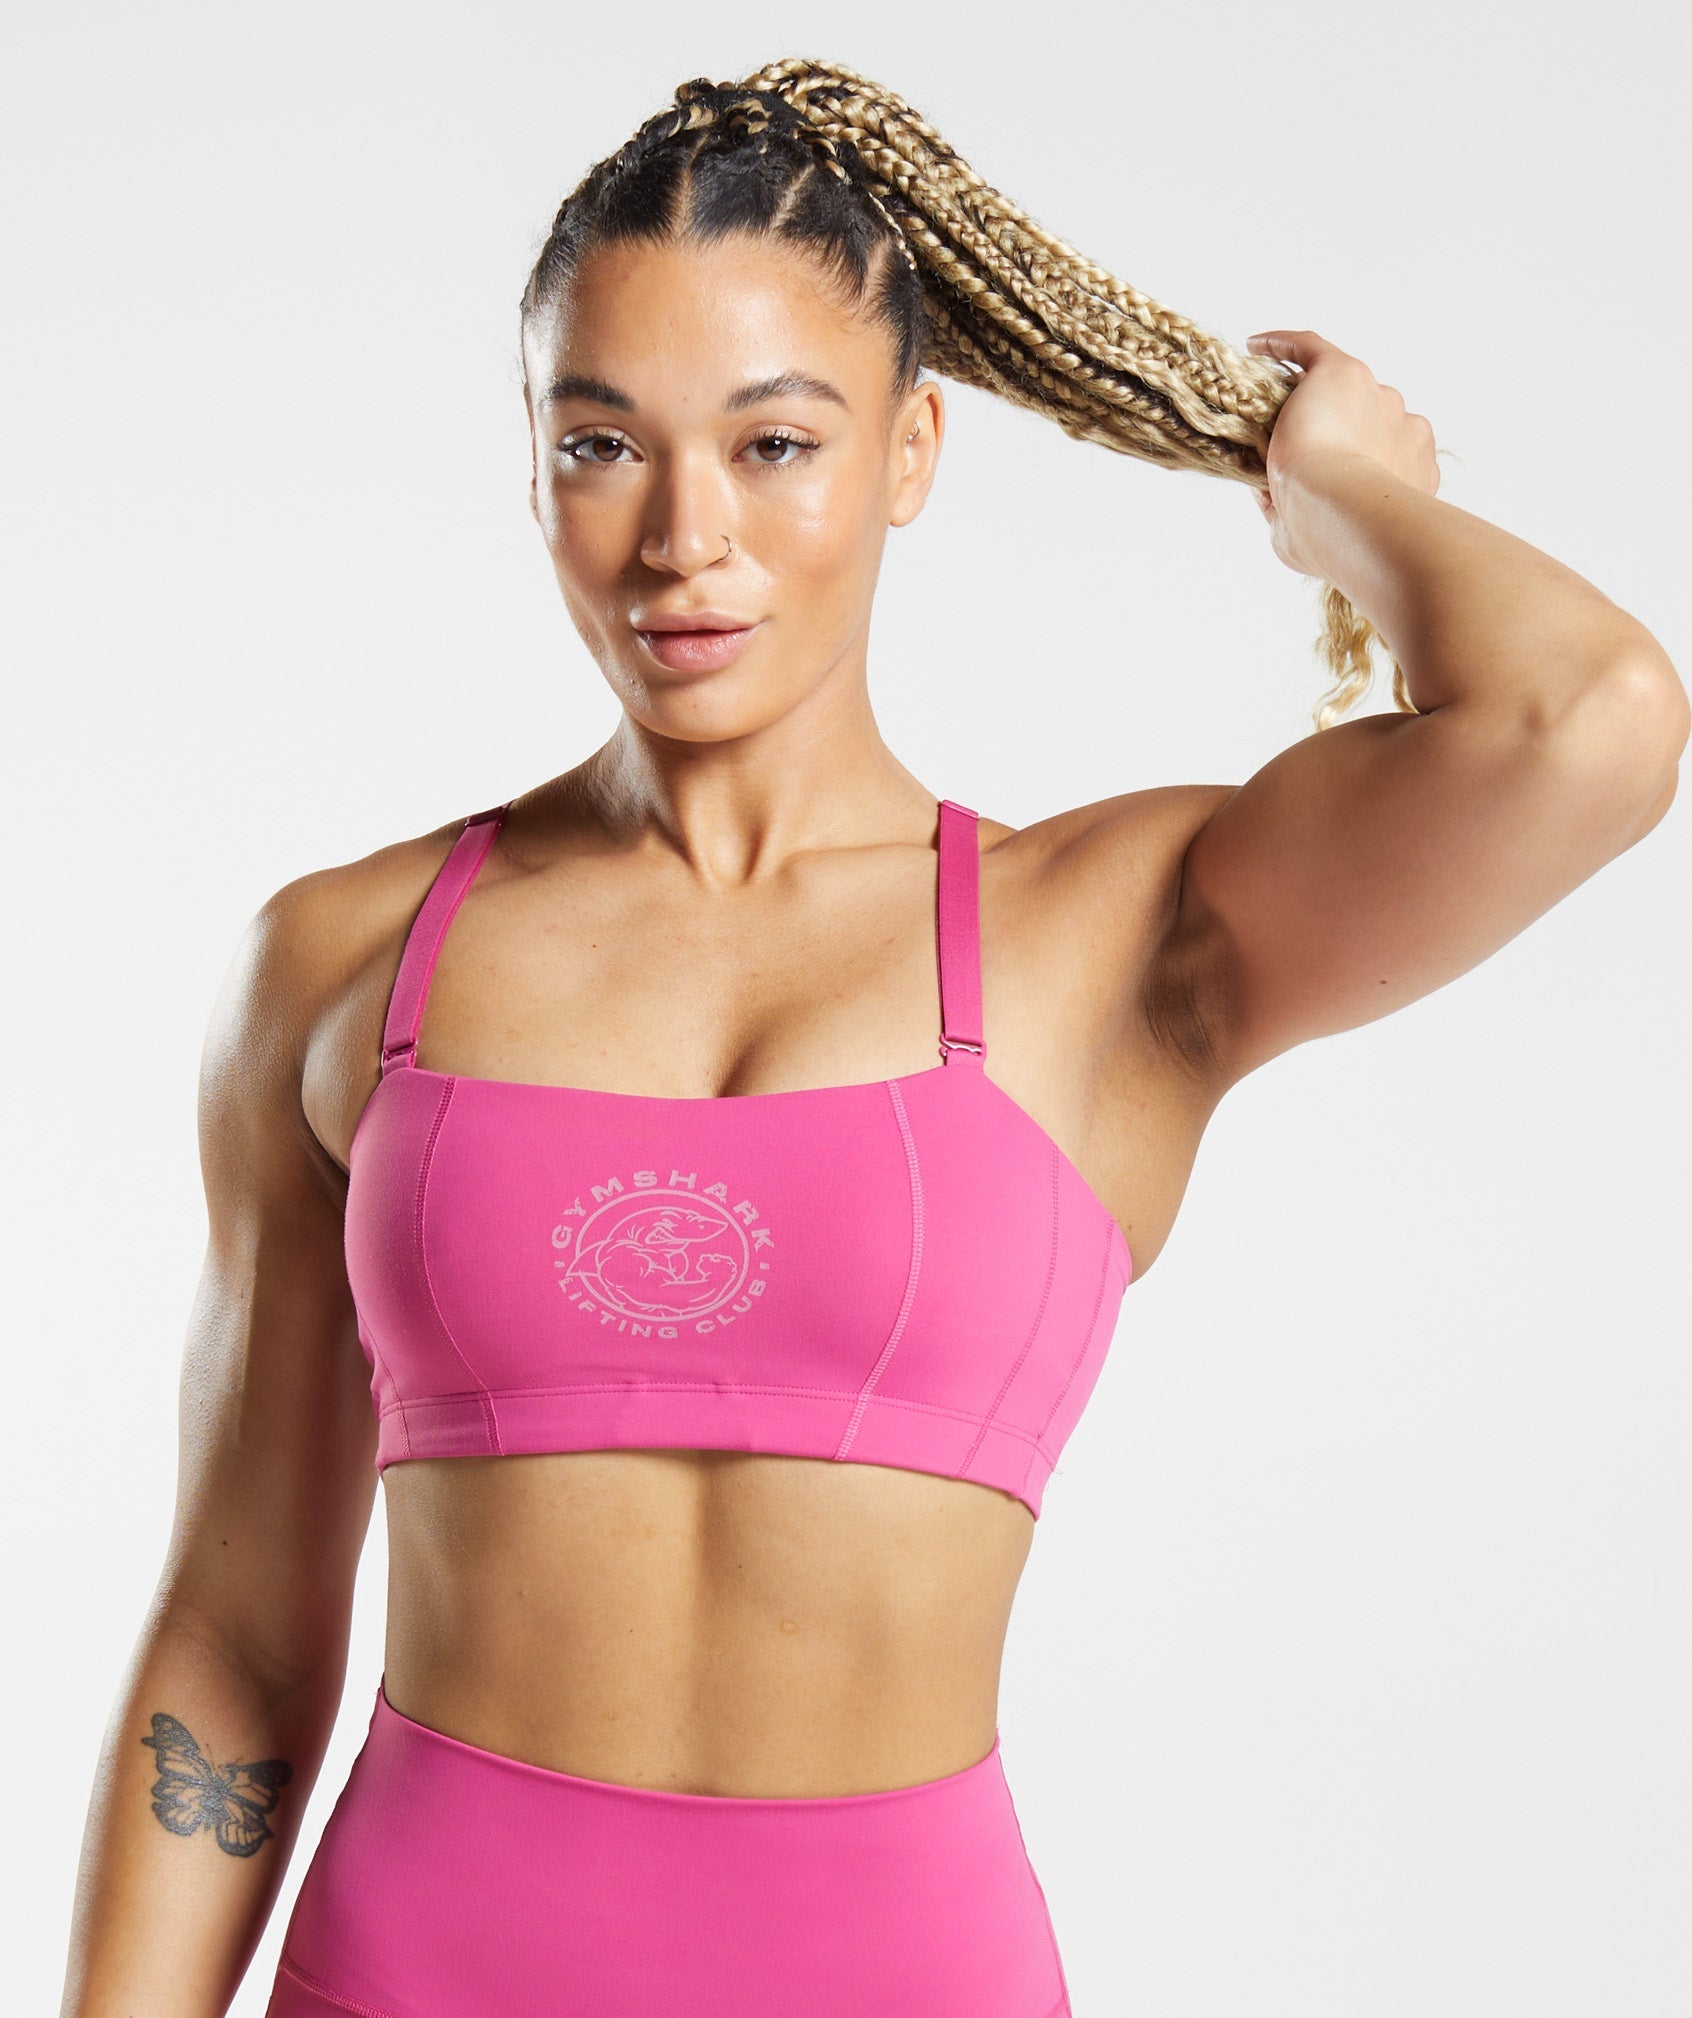 Gymshark Sport Bra Pink Size XS - $30 - From Janelle